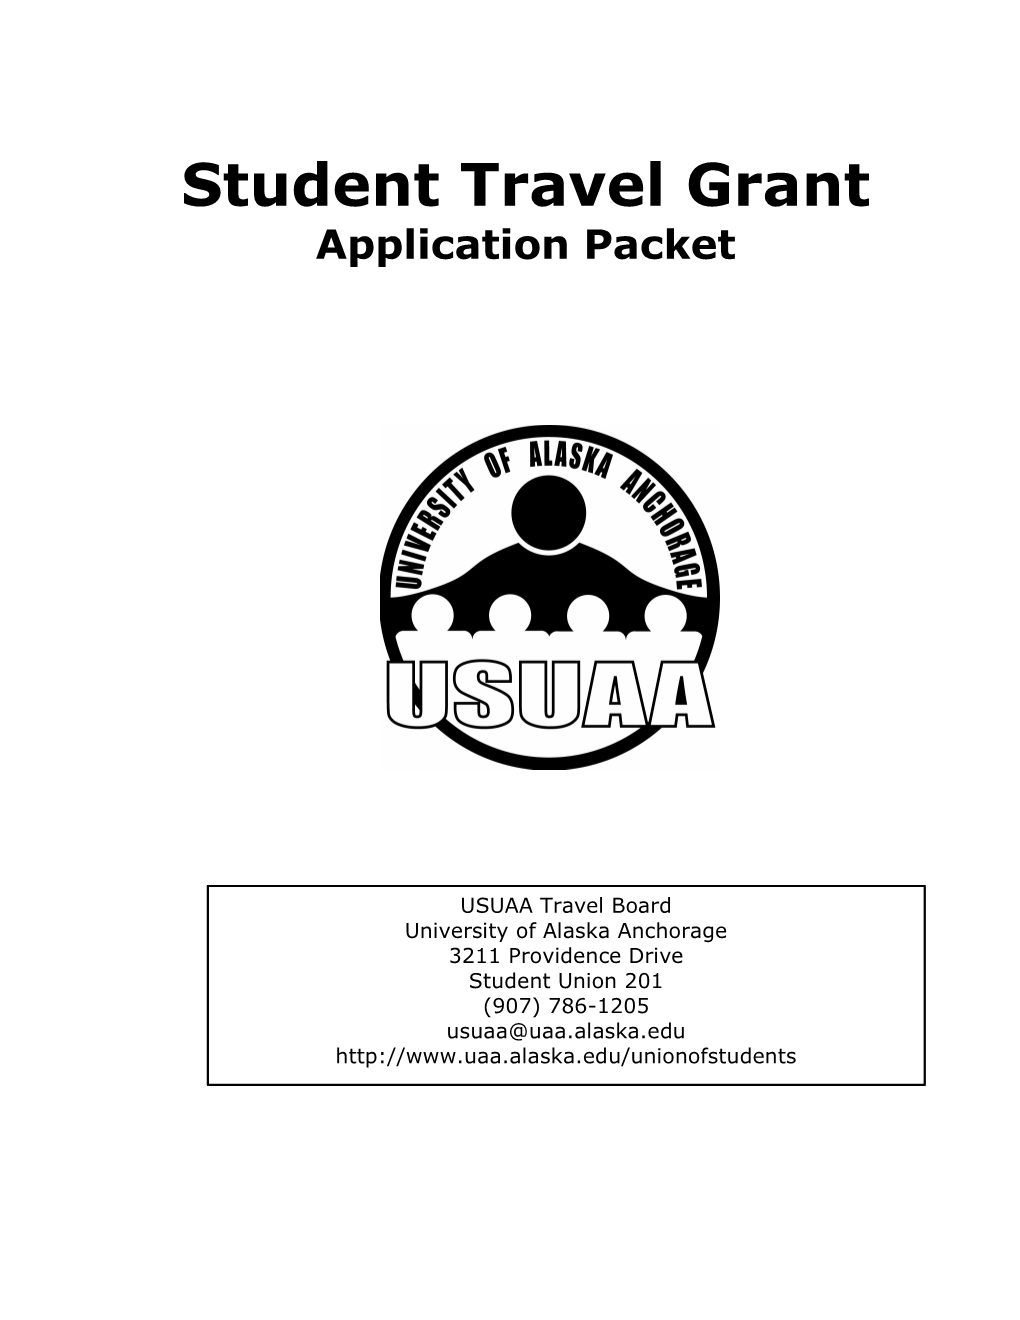 Student Travel Grant Application